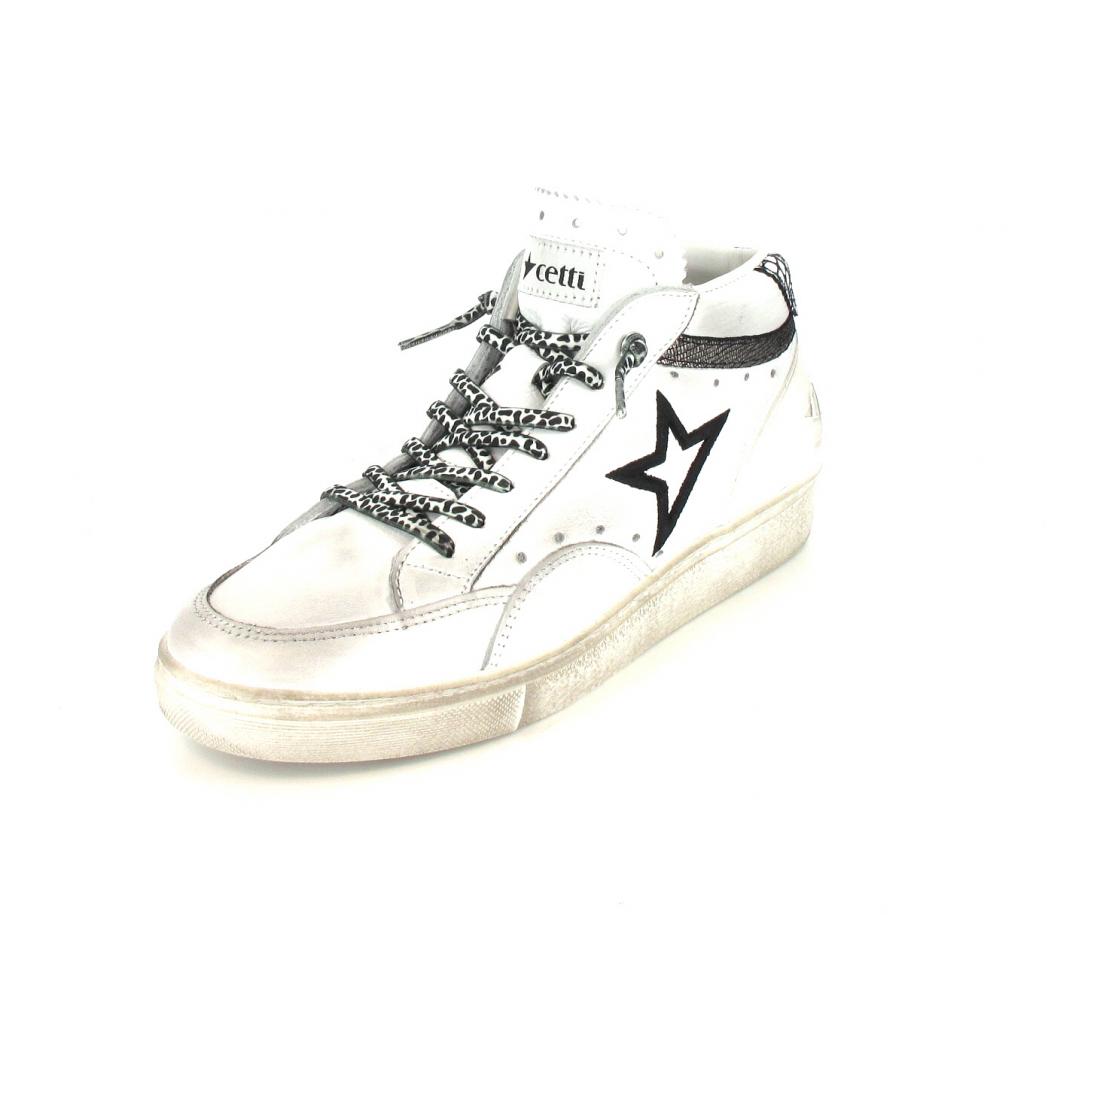 Cetti Sneaker high dirty white silver